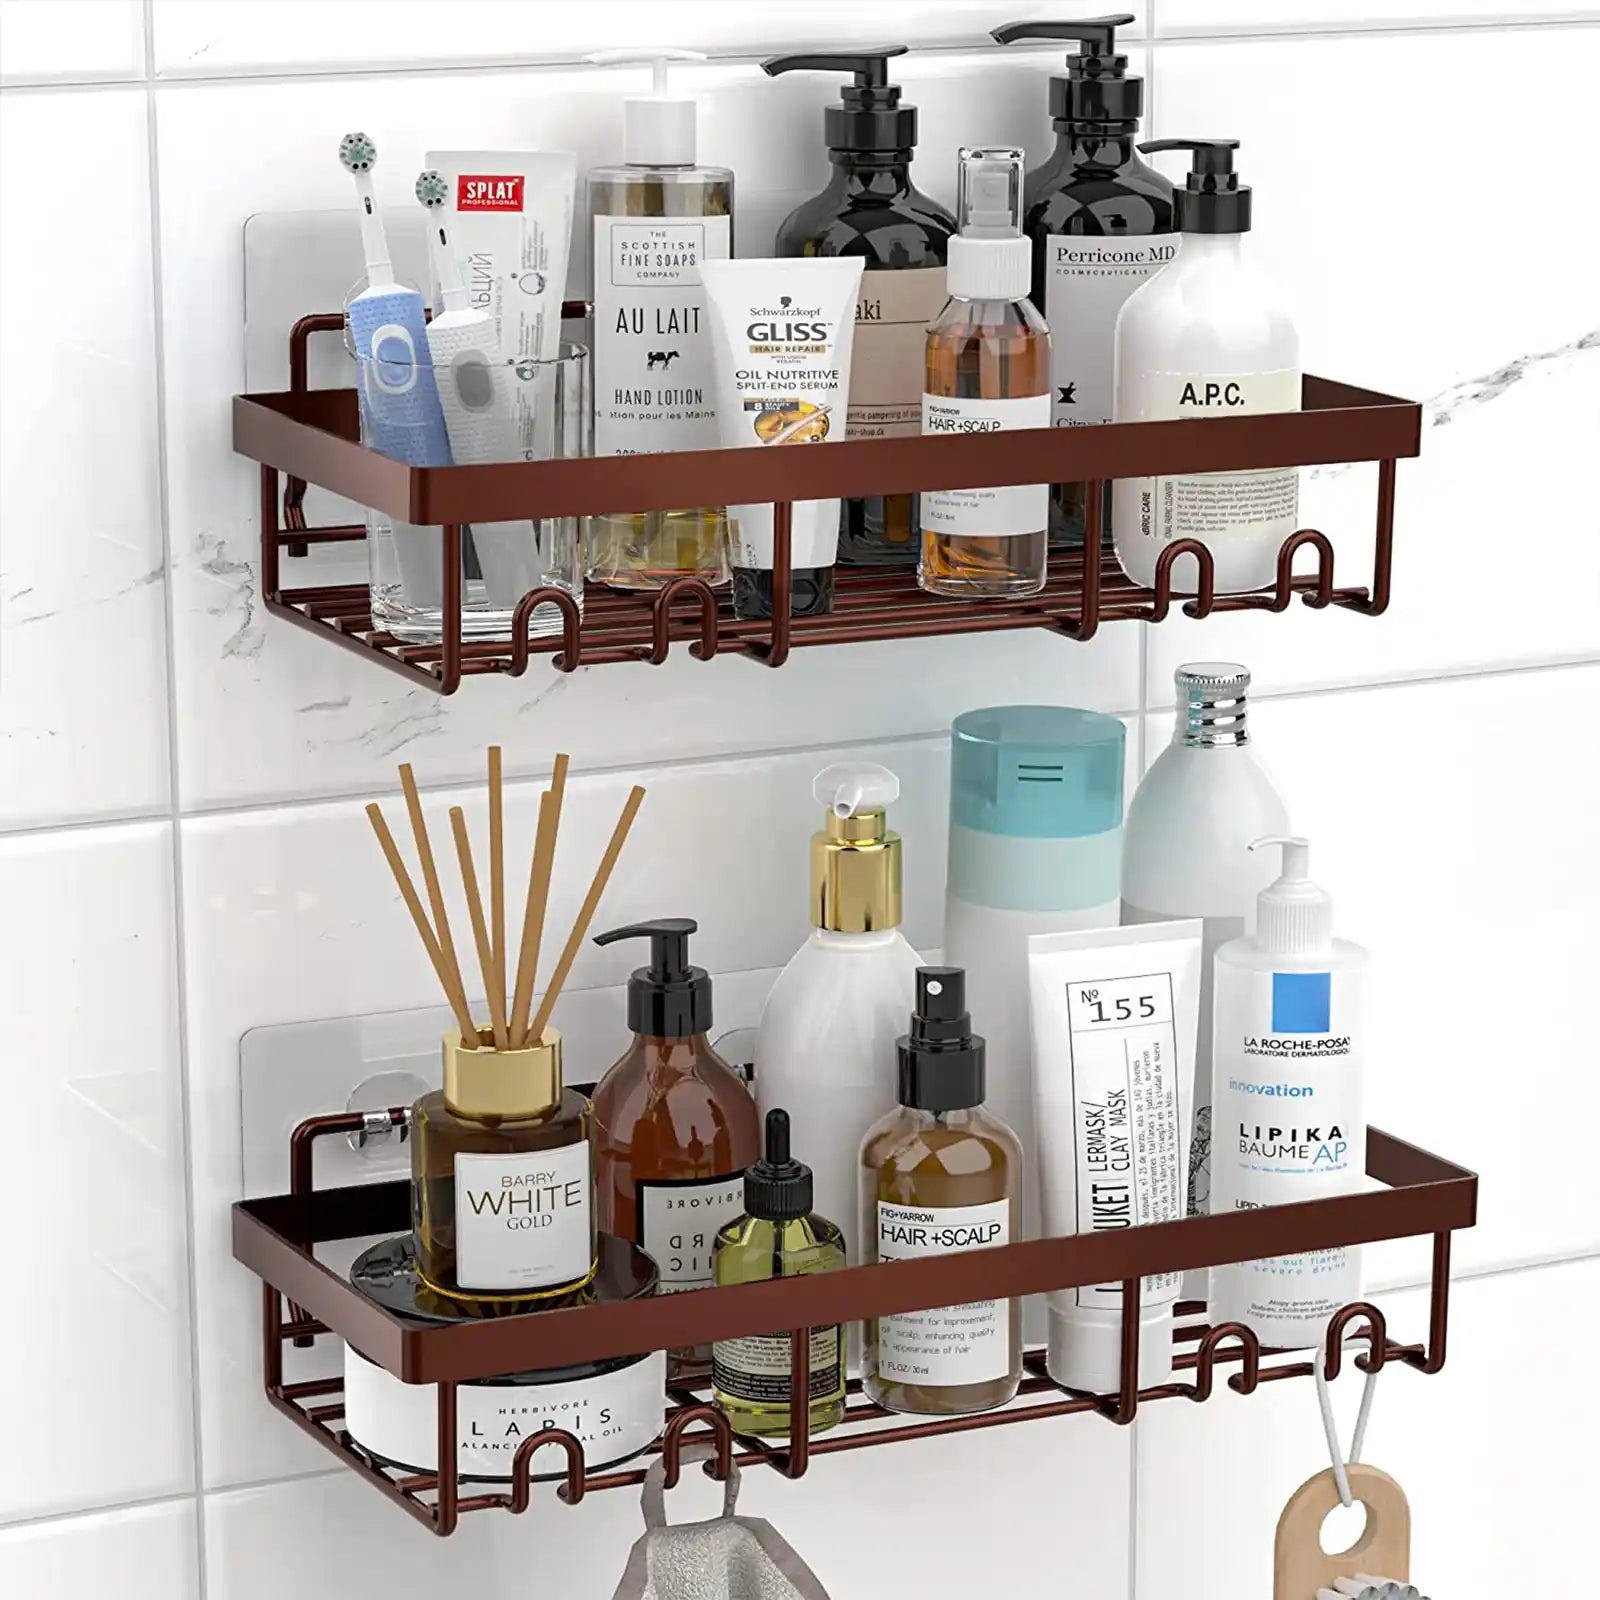 2 Pack Shower Caddy Shelf Organizer Rack, Bathroom Gadgets Accessories Decor, Household Essentials, Self Adhesive Shelves Organization and Storage